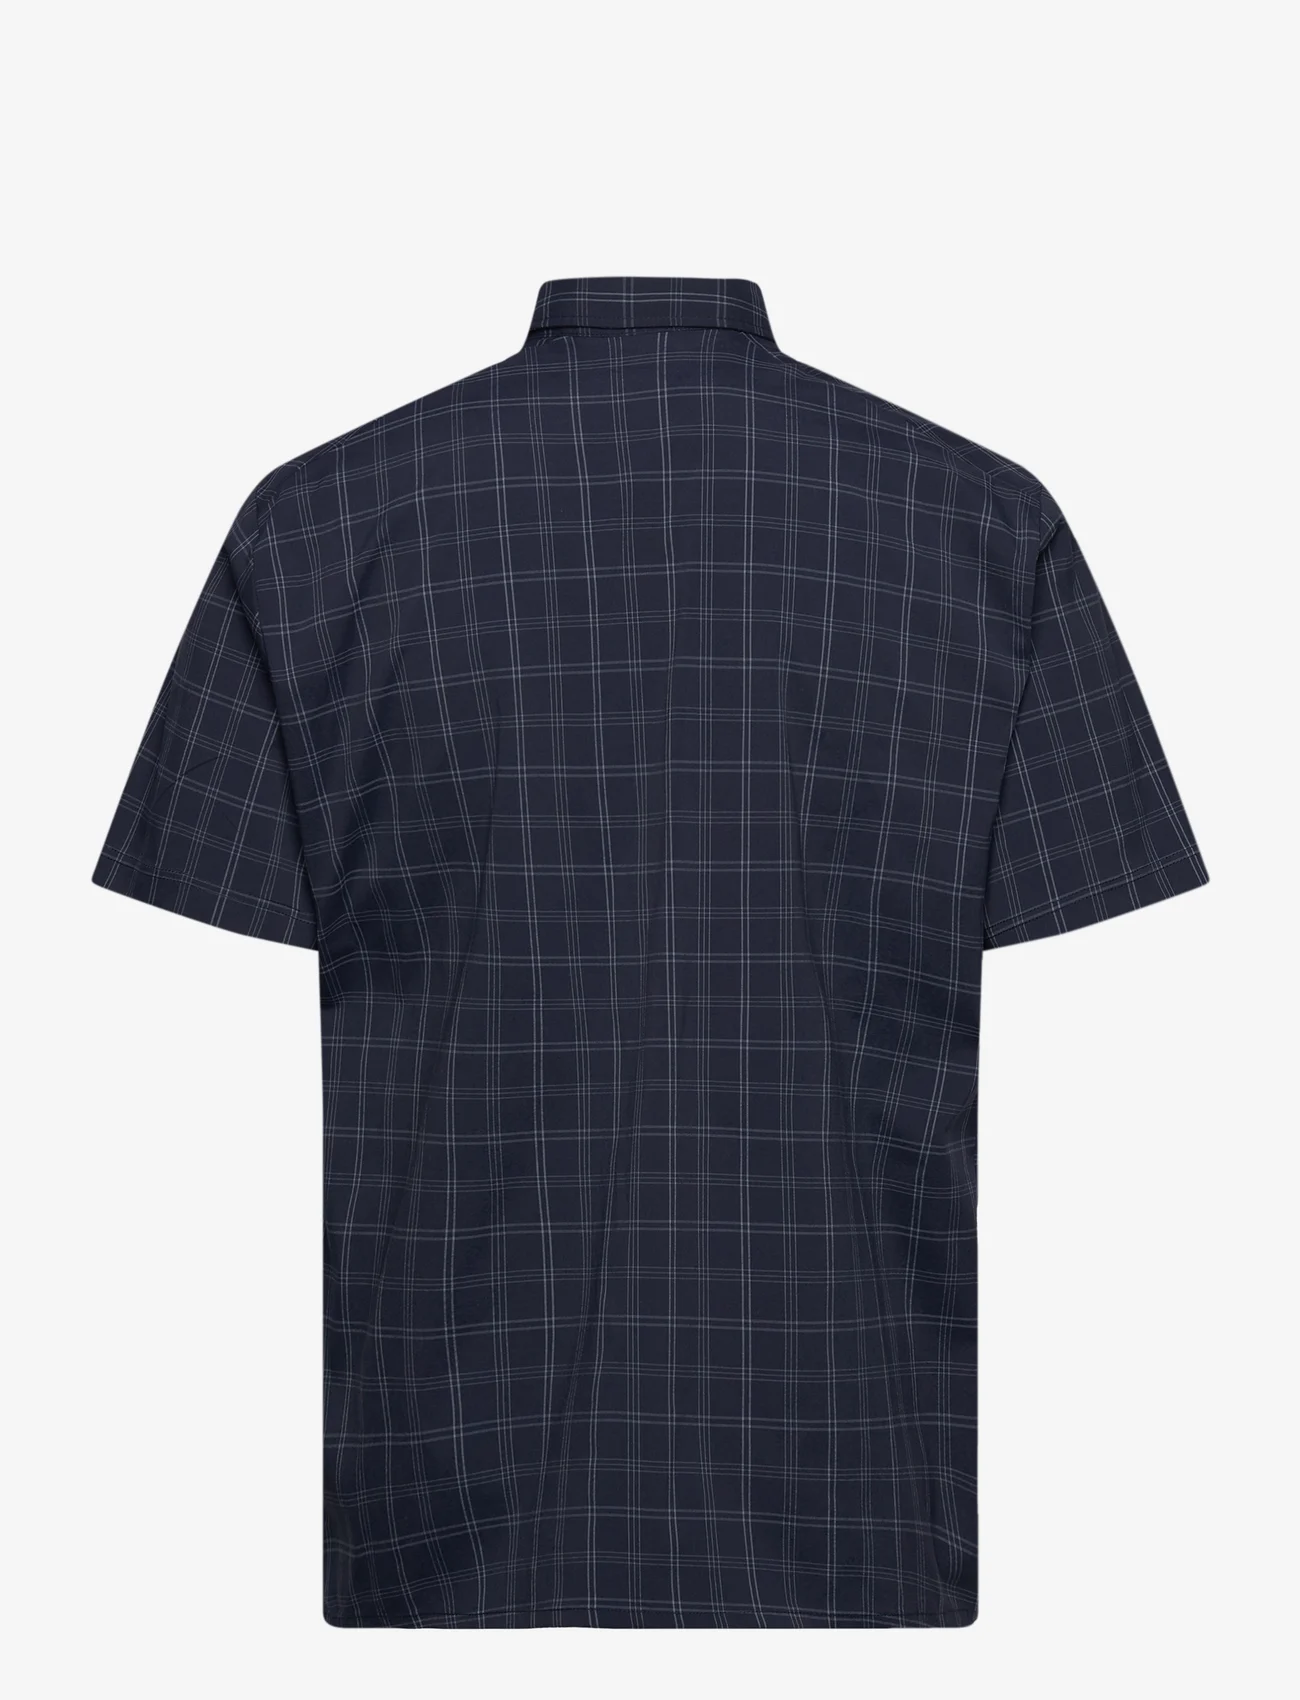 Jack Wolfskin - NORBO S/S SHIRT M - rutiga skjortor - night blue checks - 1